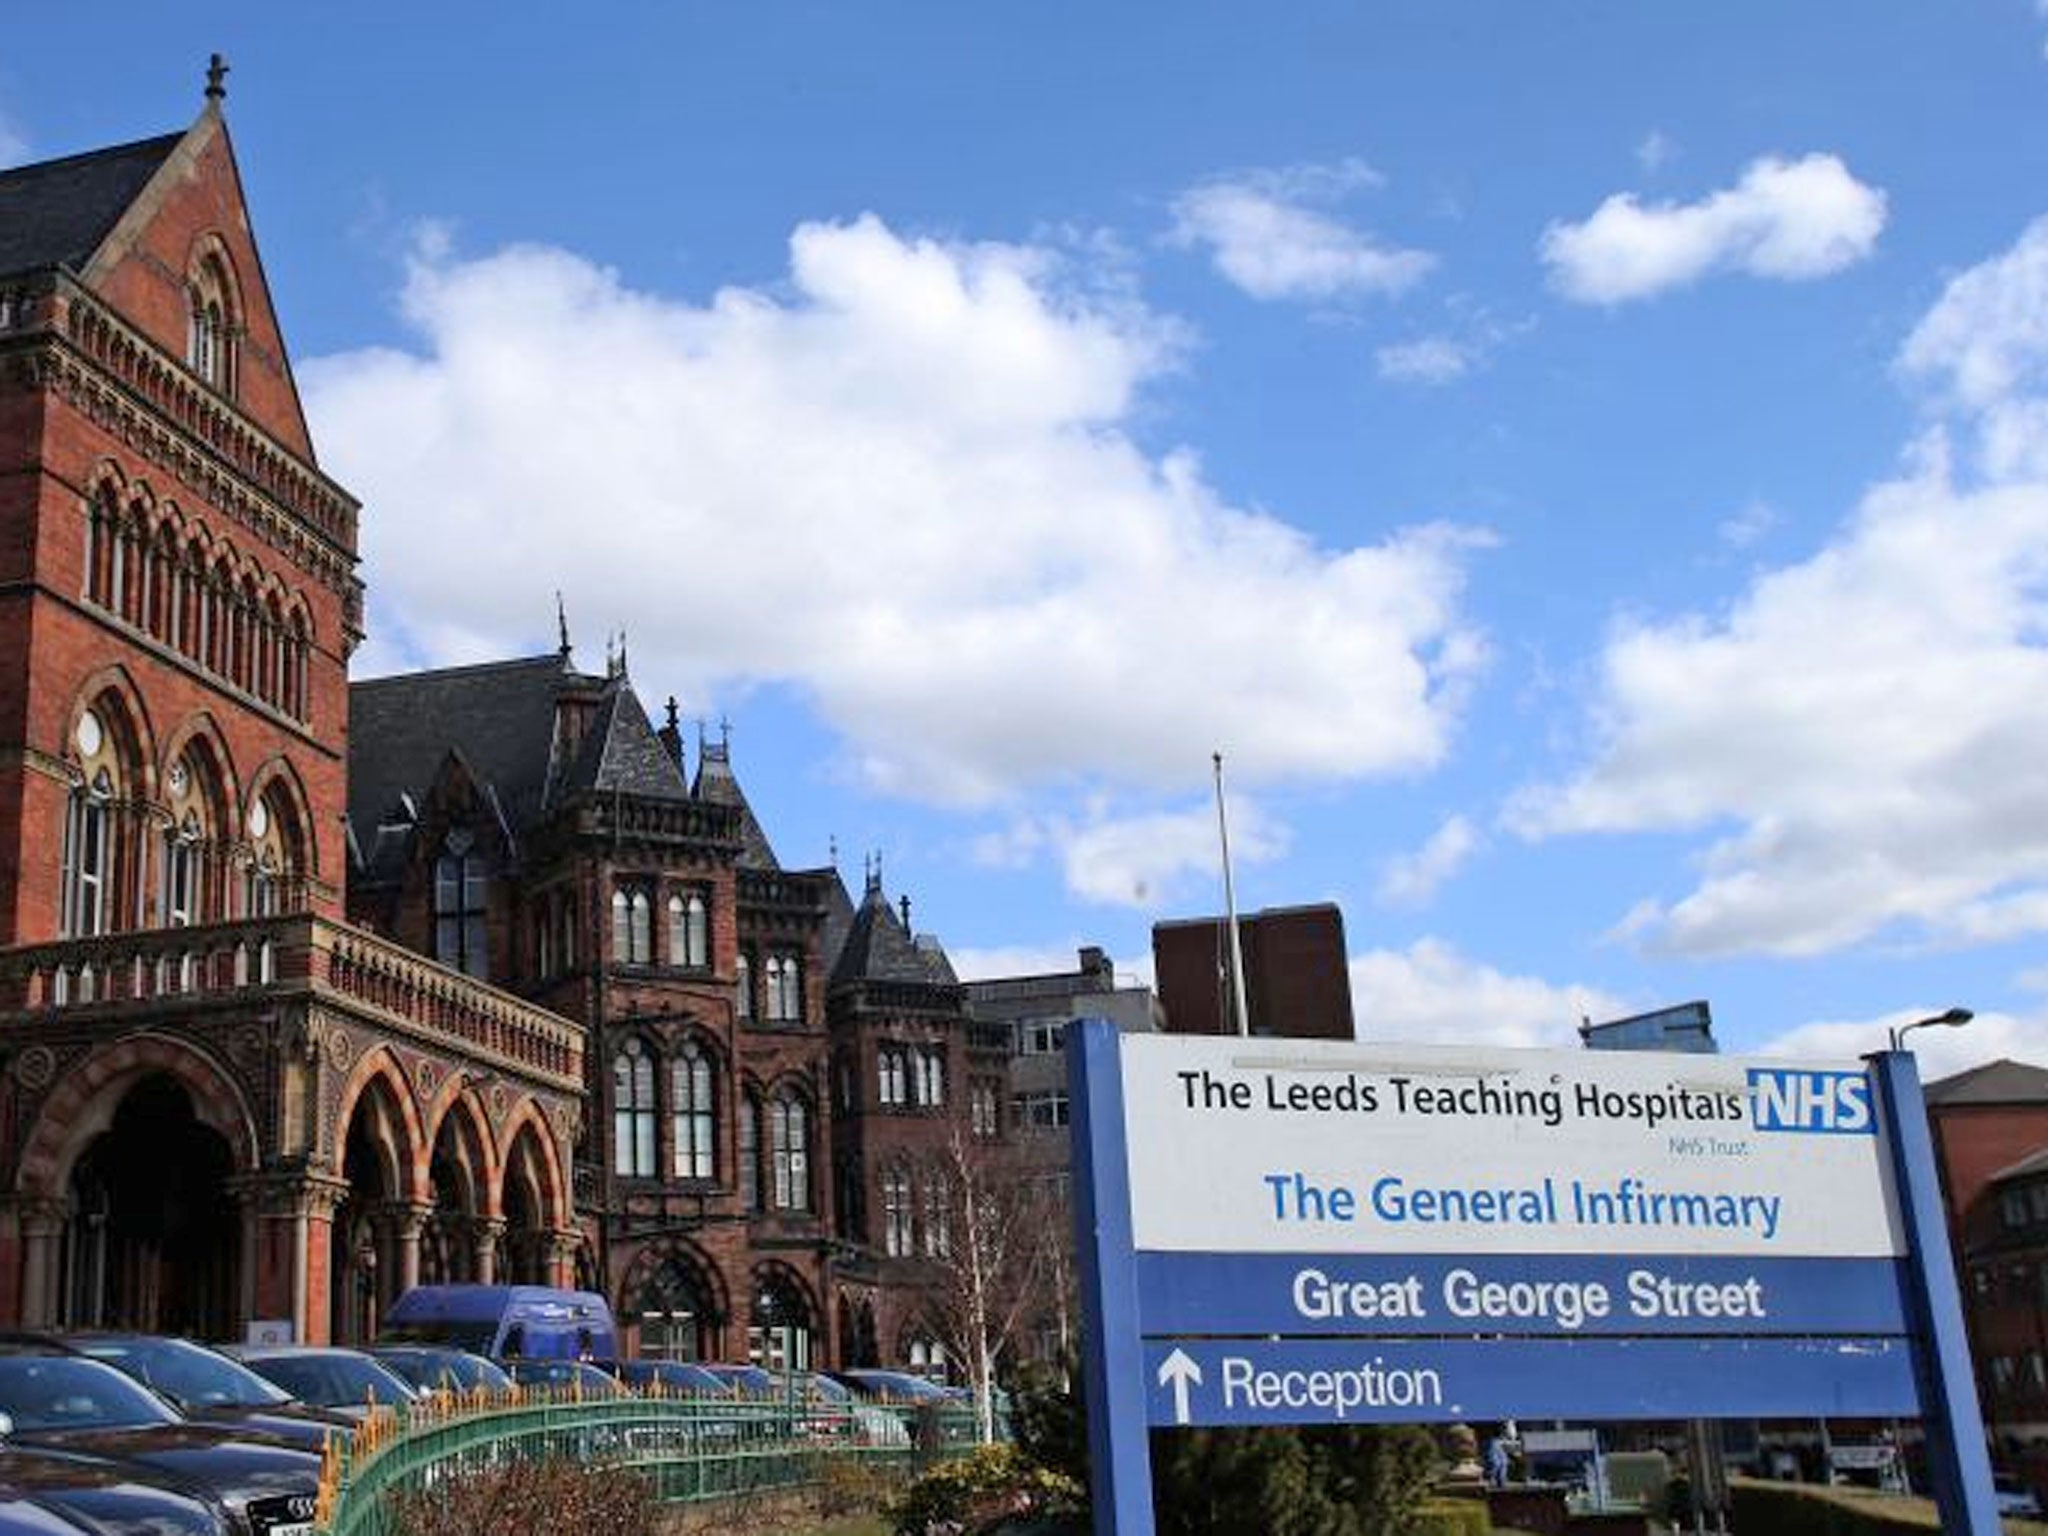 Children's heart surgery at Leeds General Infirmary will restart on Wednesday